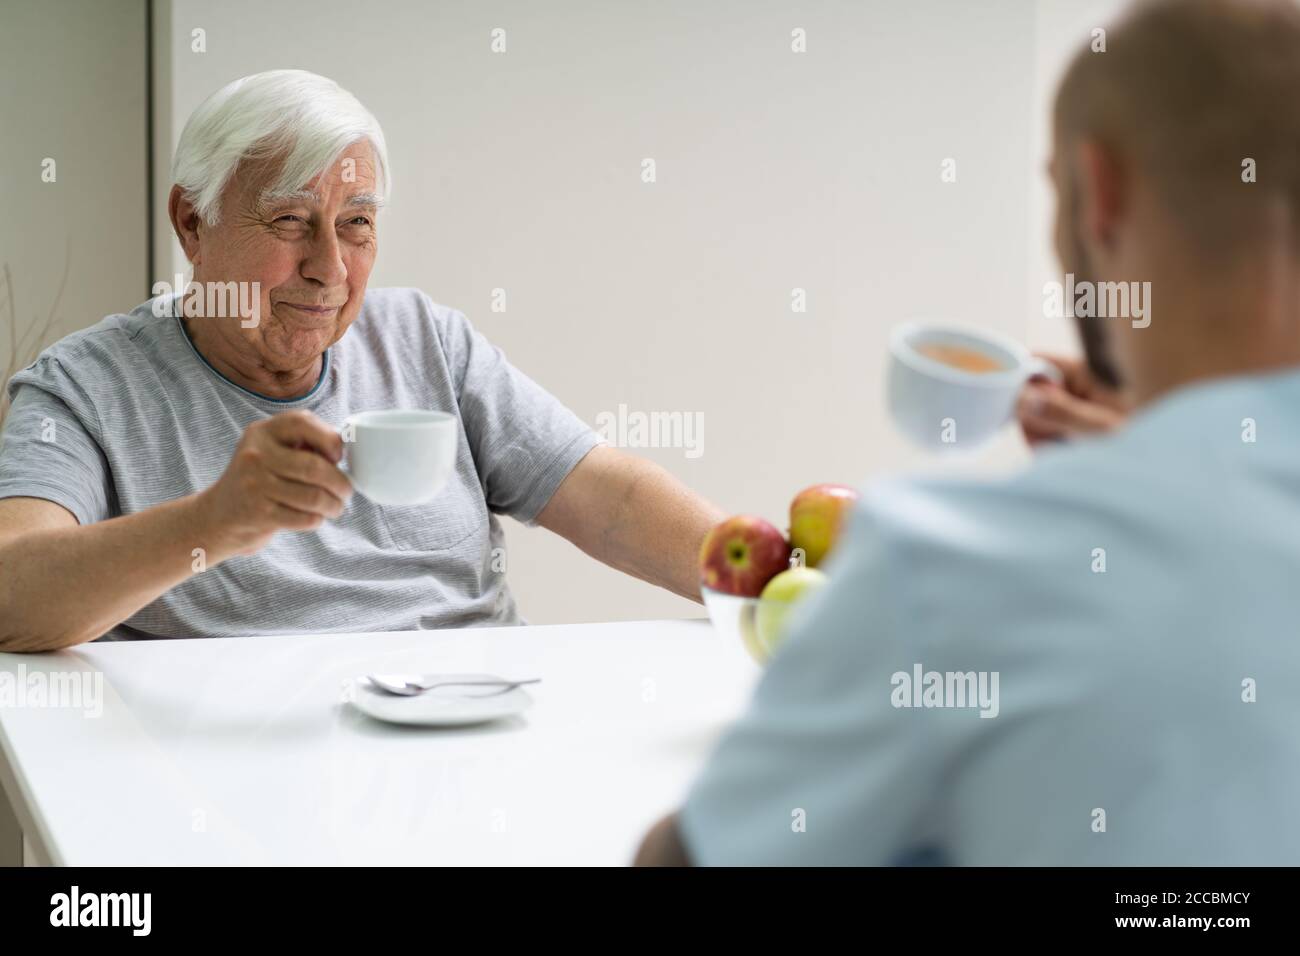 Caretaker In Retirement Home With Elder Man Stock Photo